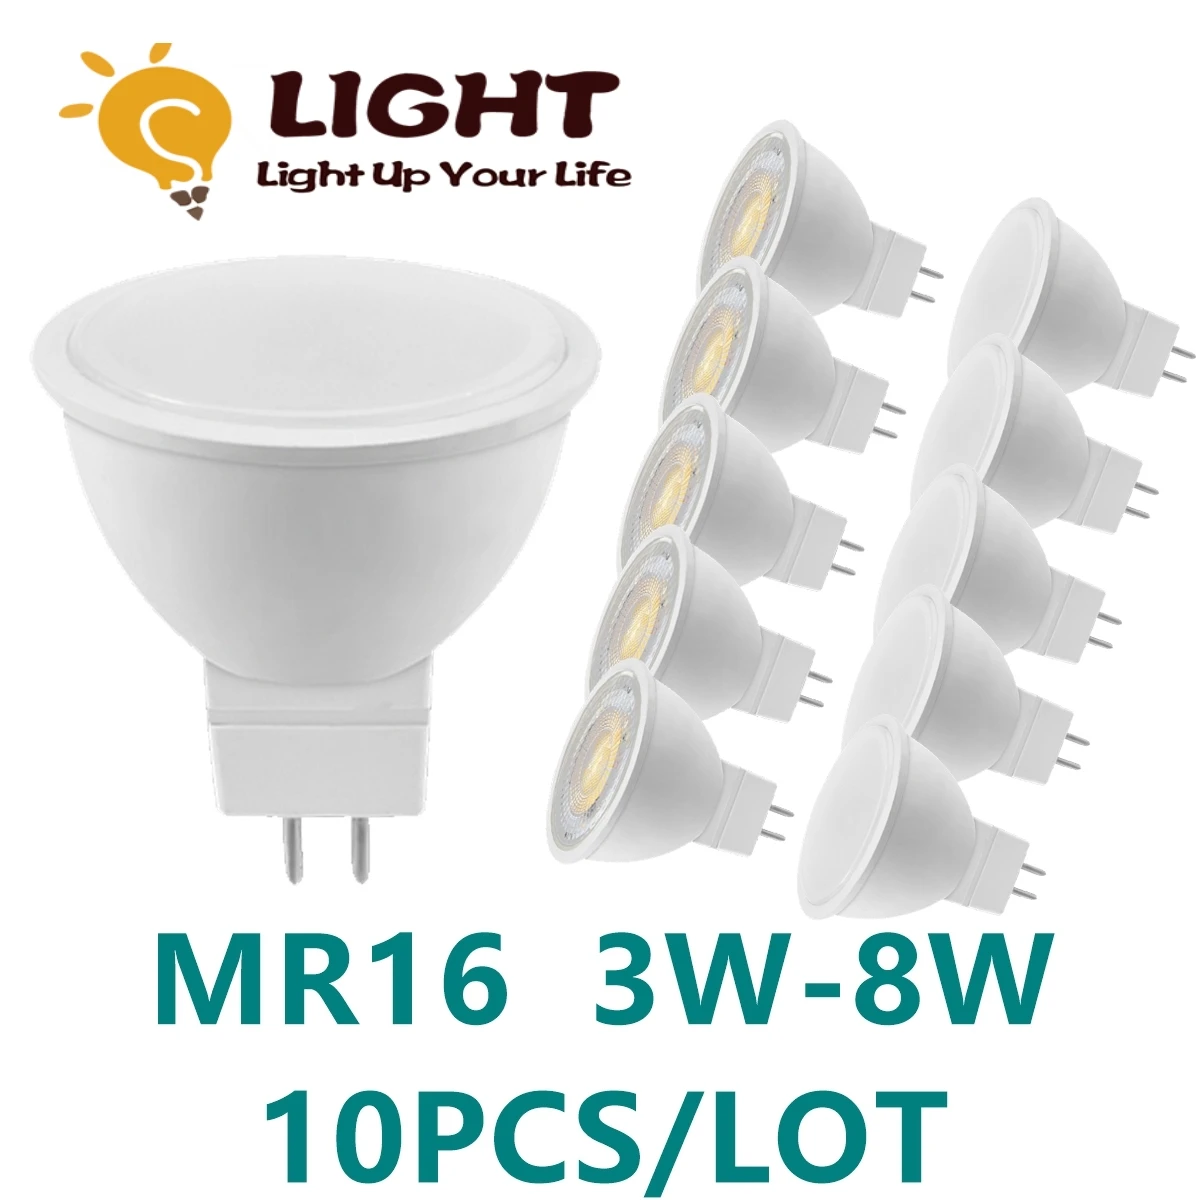 Mr16 Gu5.3 Spotlight 3w-8w 220v Ac110v Ac/dc12v Beam Angle 38/120 Degree For Home Energy Saving Indoor Light Bulb For Table - Led Spotlights - AliExpress